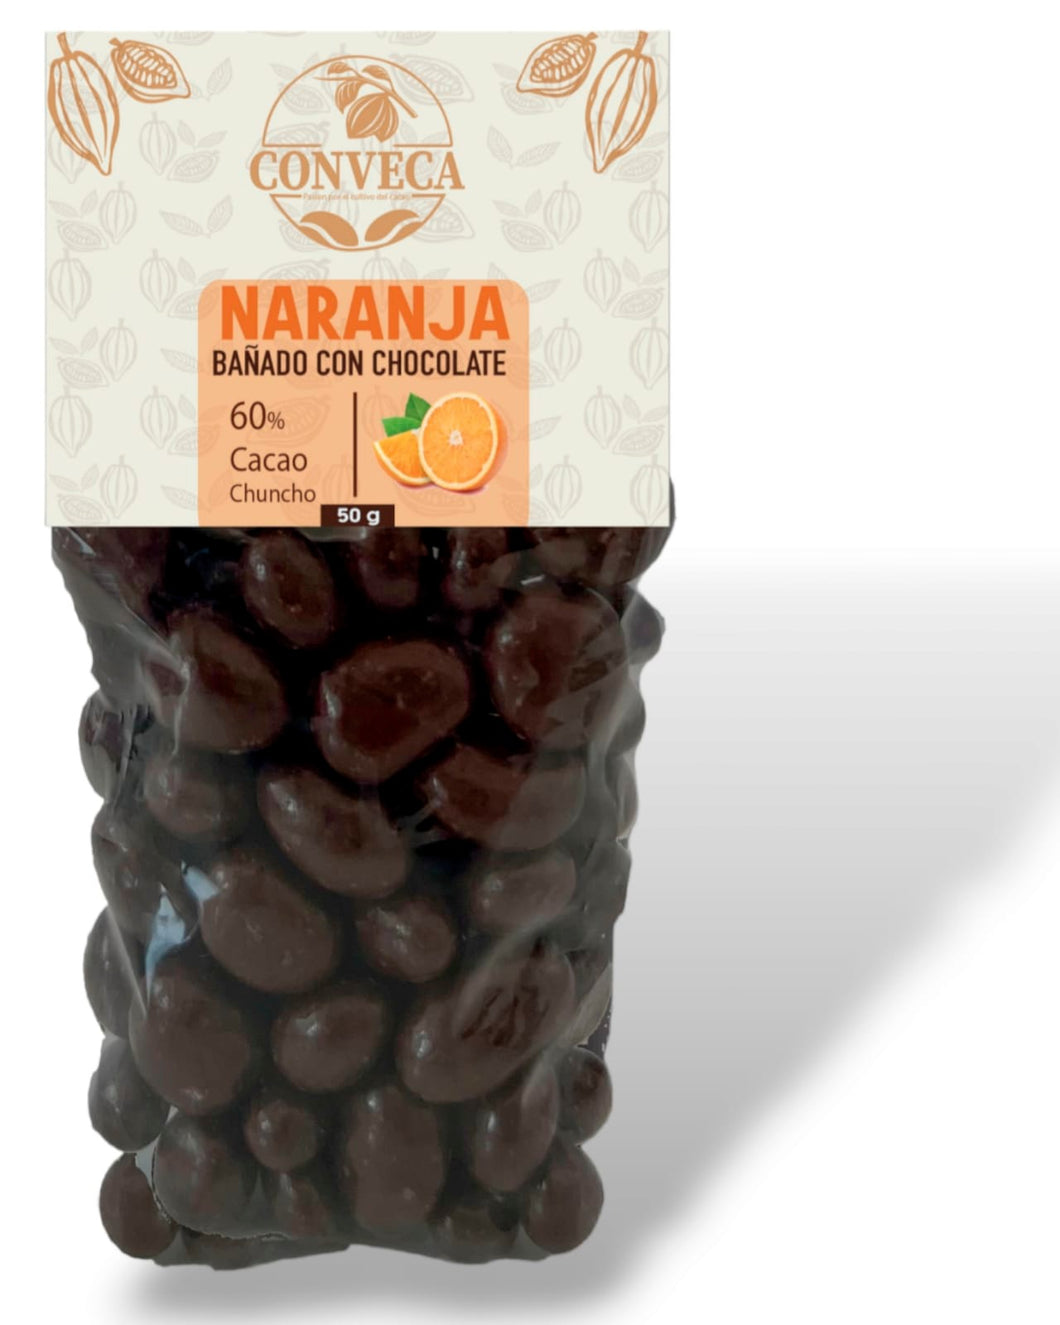 Grageados de Chocolate Bitter - Cacao Chuncho 60%